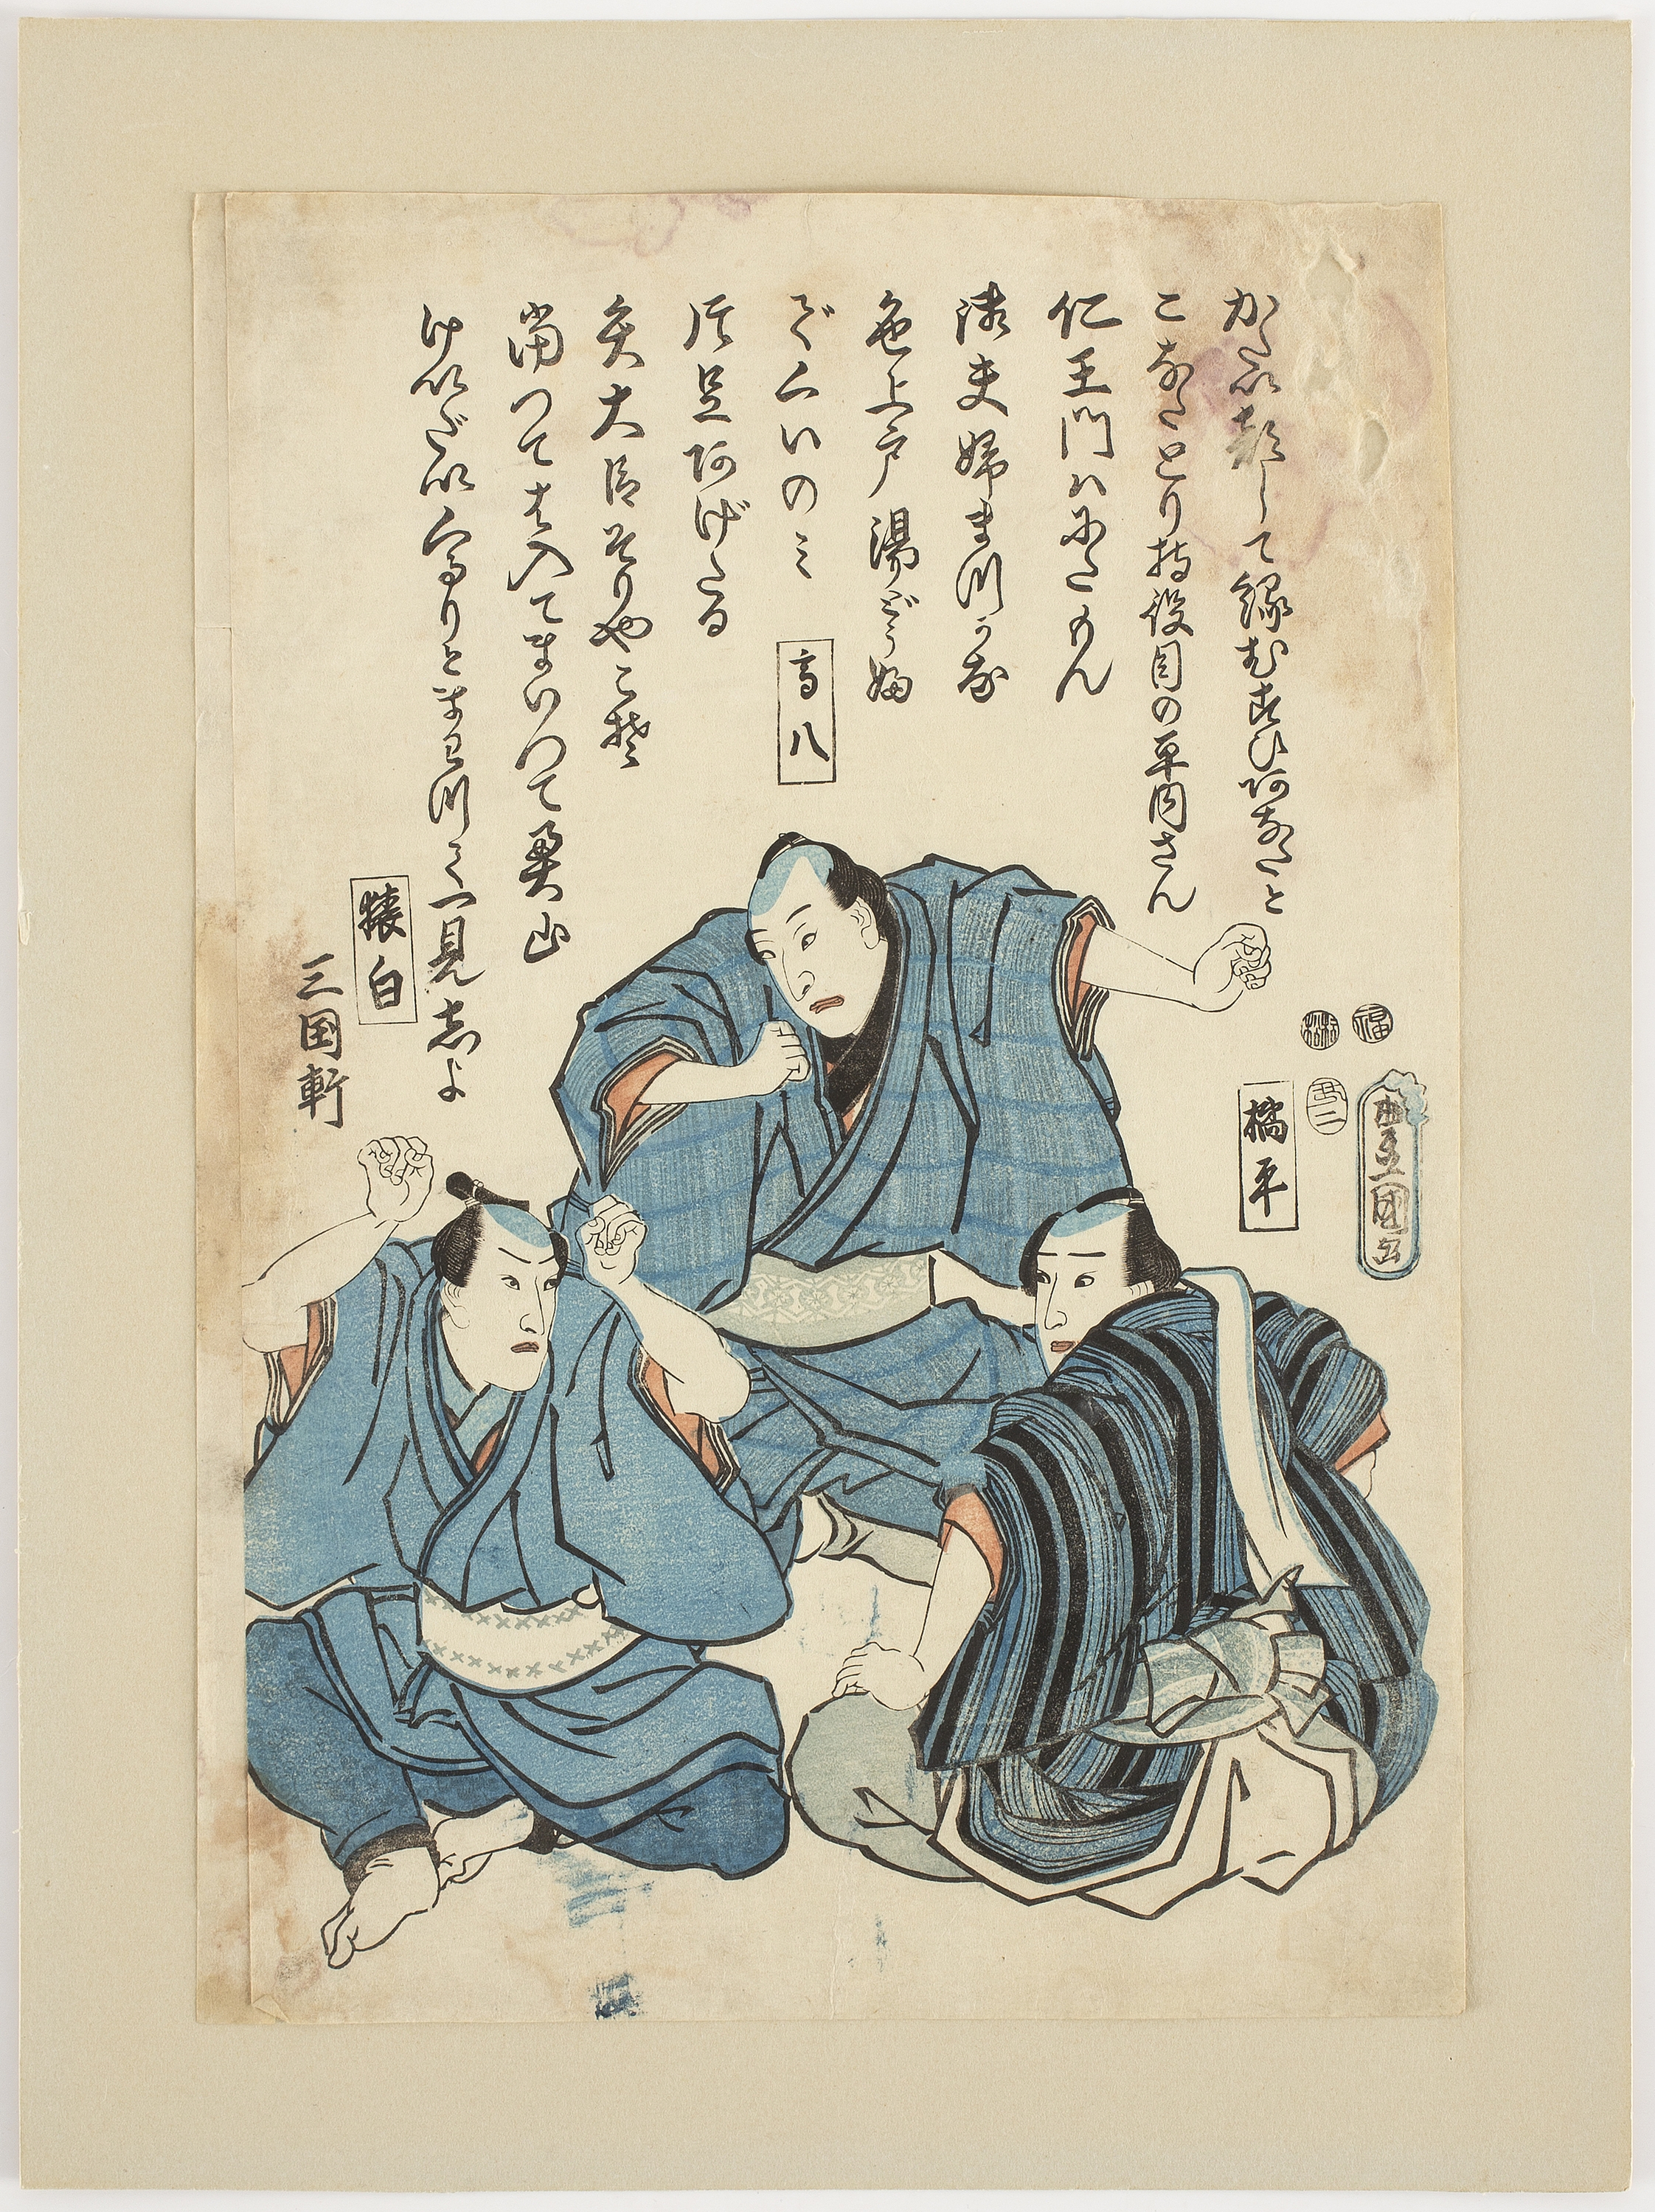 A portrait of three male actors by Utagawa Toyokuni